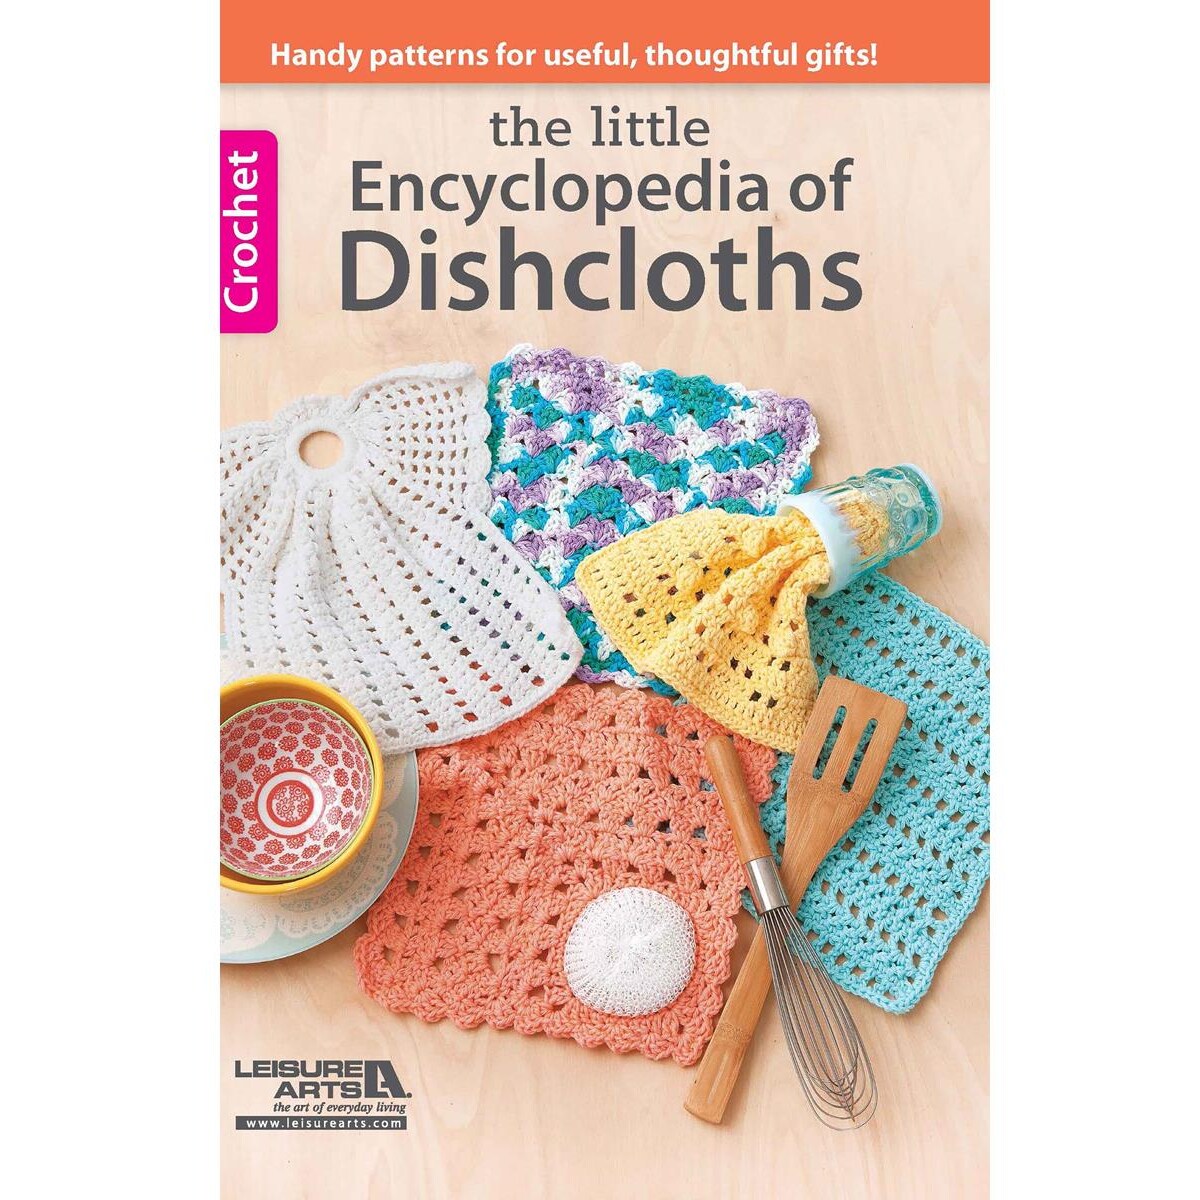 Leisure Arts Encyclopedia Of Dishcloths Crochet Book, Crochet Patterns, Crochet Dishcloth Pattern Books, Leisure Arts Crochet Books, Crochet Cloth Pattern Books, Cloths Crochet Patterns